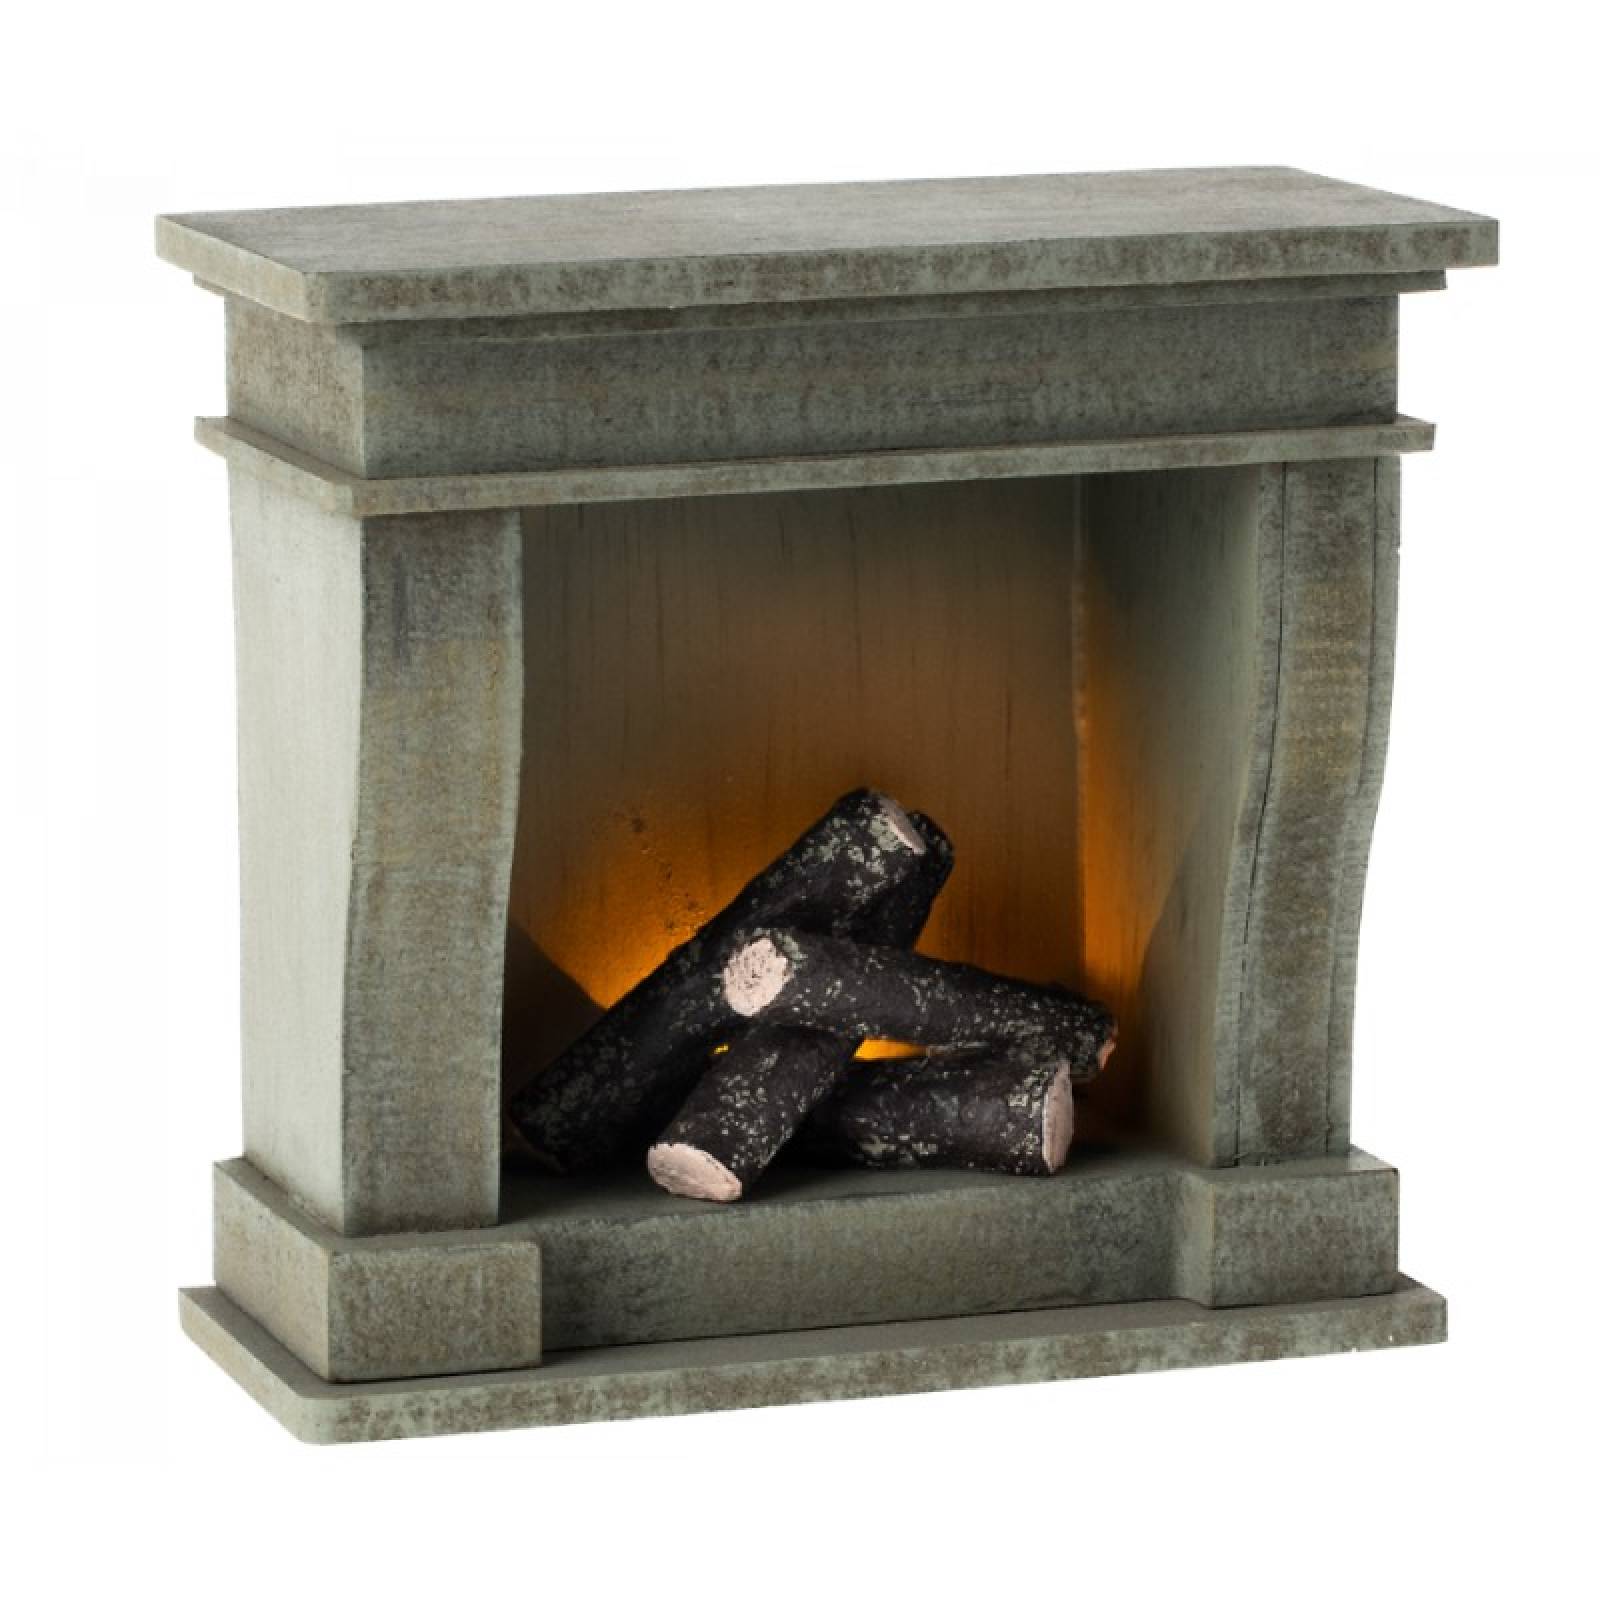 Miniature Fireplace By Maileg 3+ thumbnails